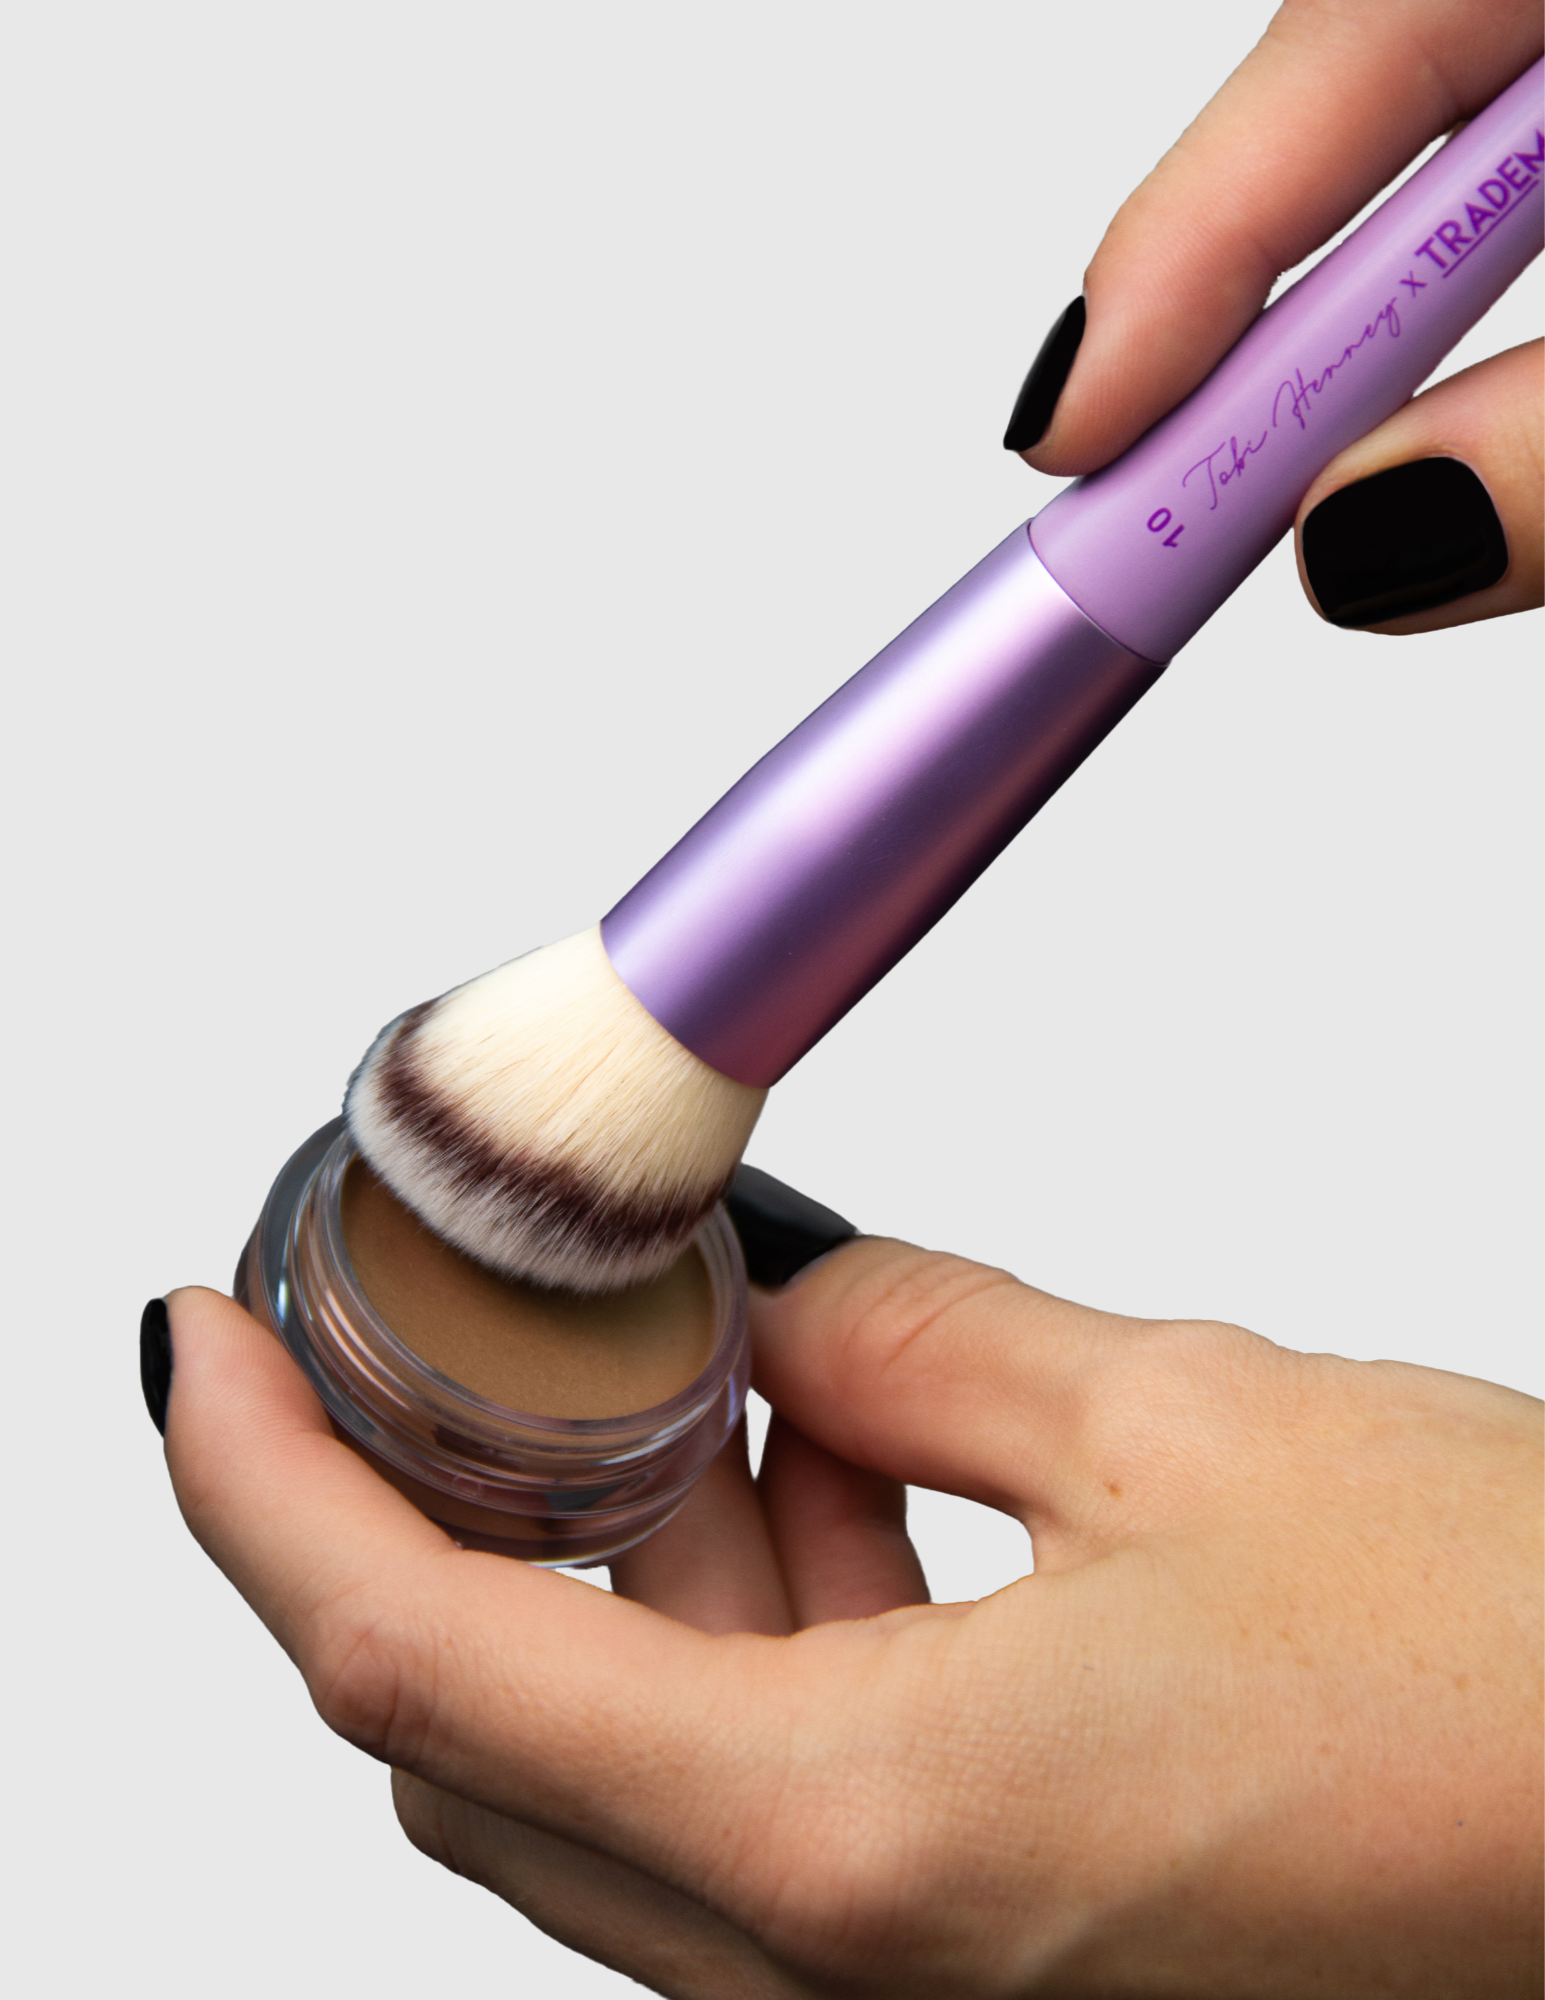 Contour Makeup Brush by Tobi Henney - #10 - Trademark Beauty